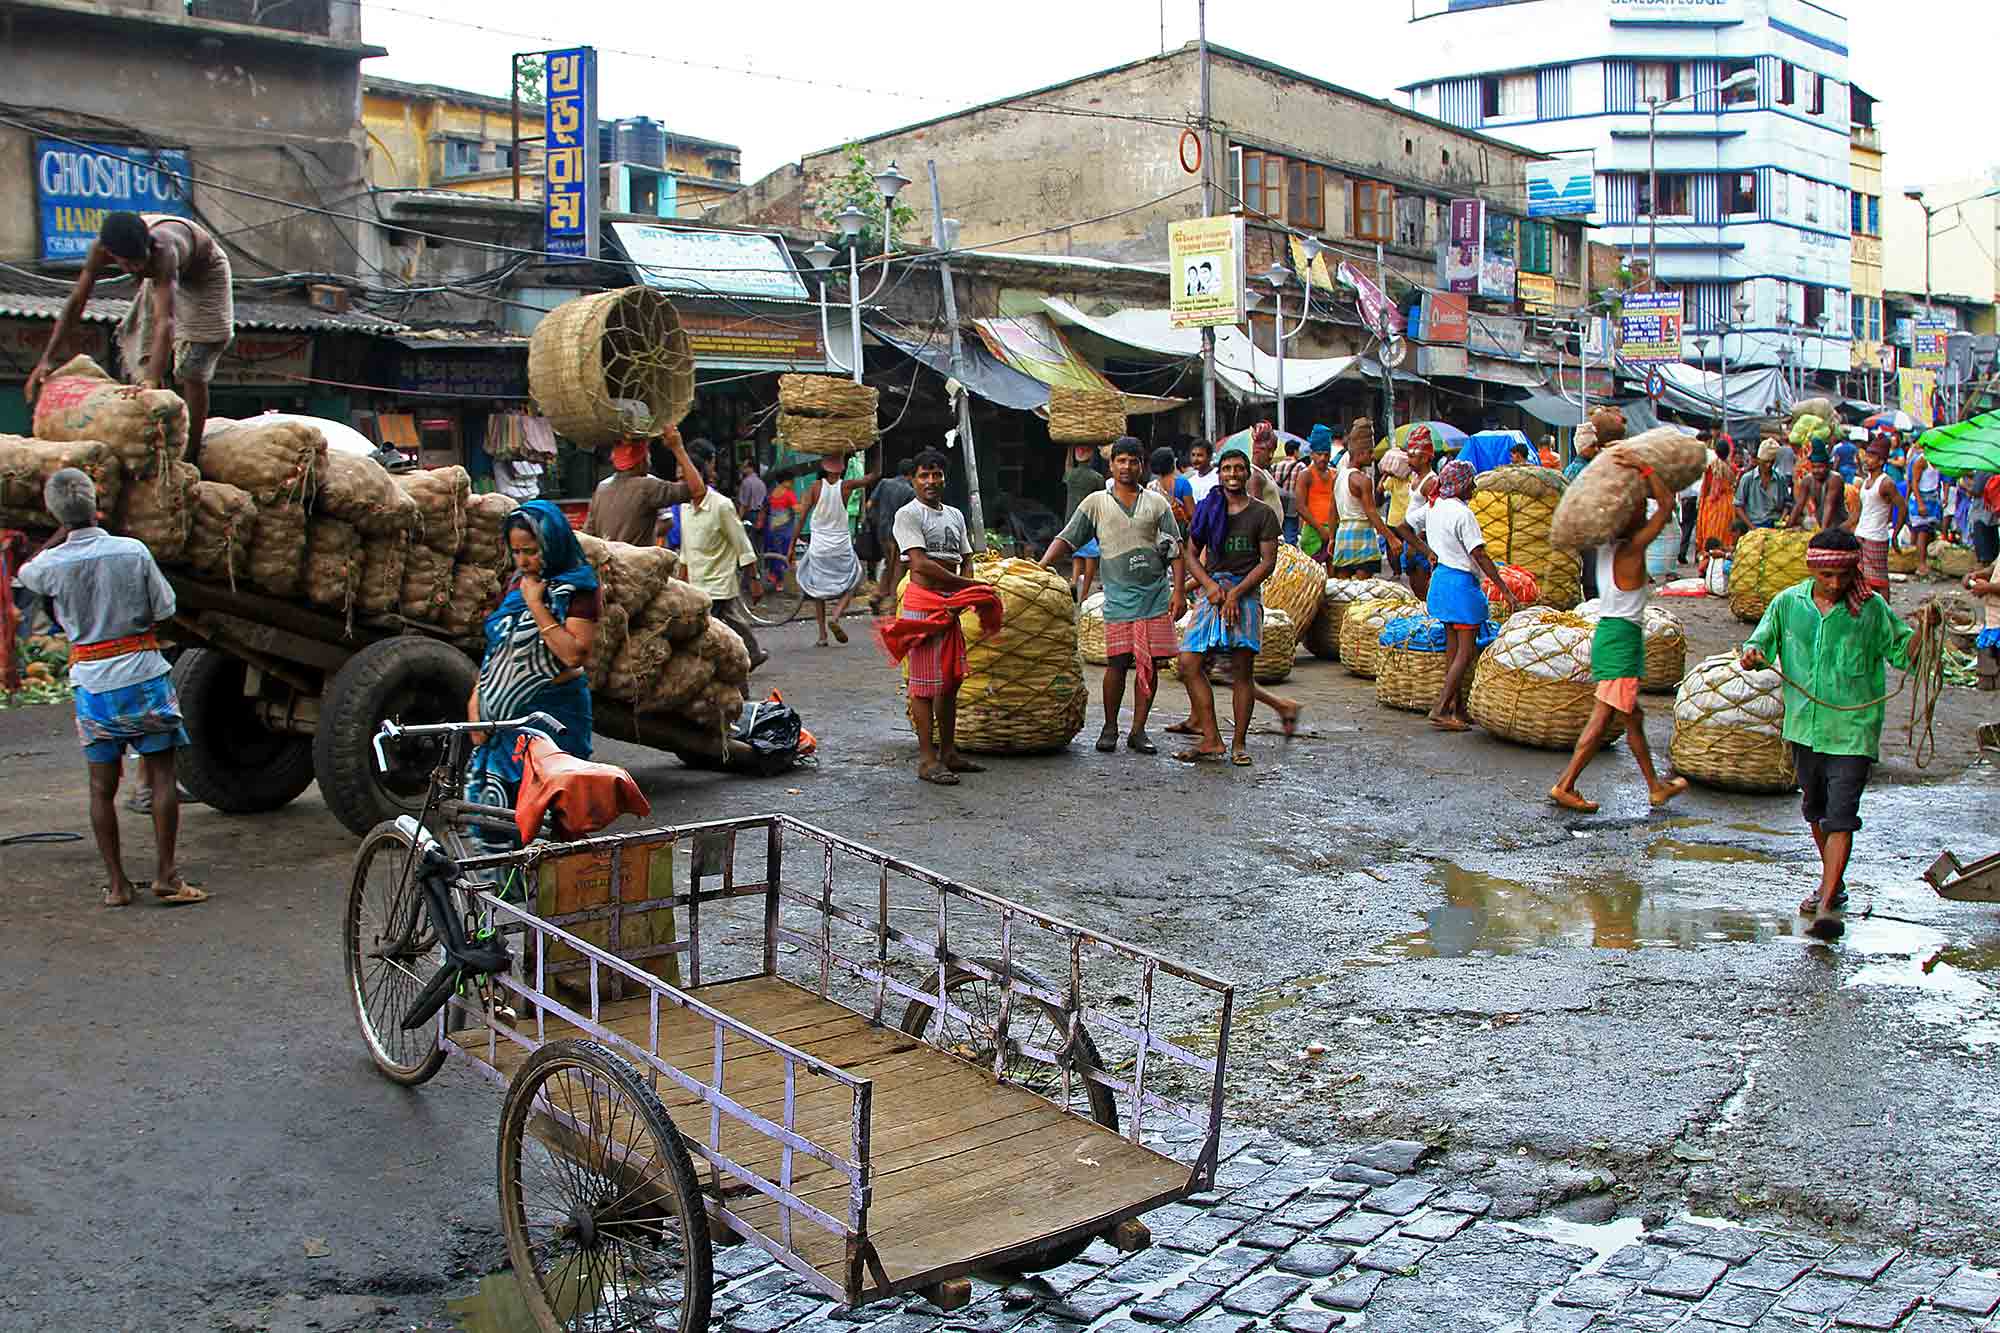 Wholesale market in Kolkata, India. © Ulli Maier & Nisa Maier